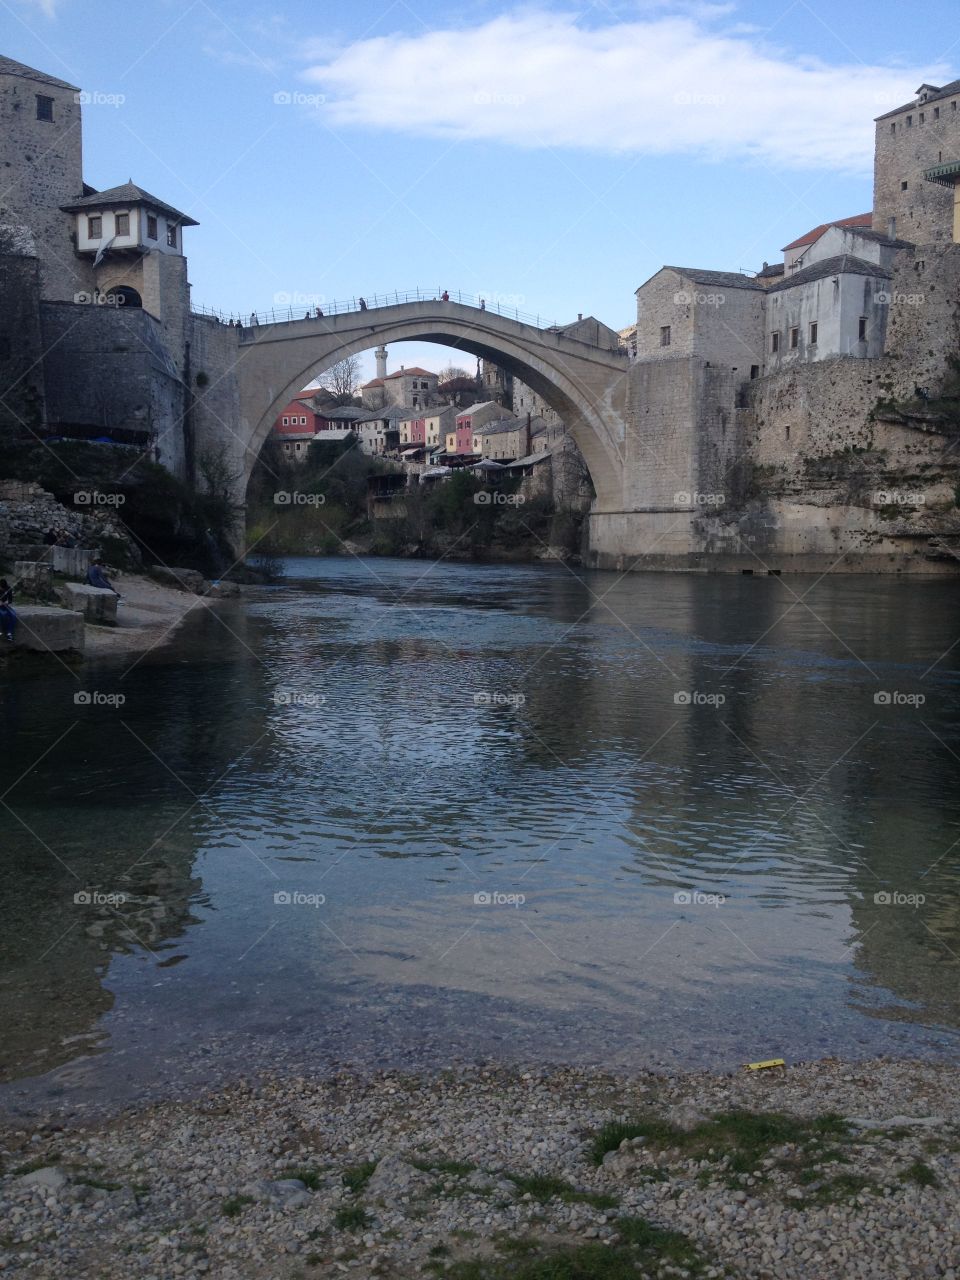 Old bridge. Old bridge in Mostar